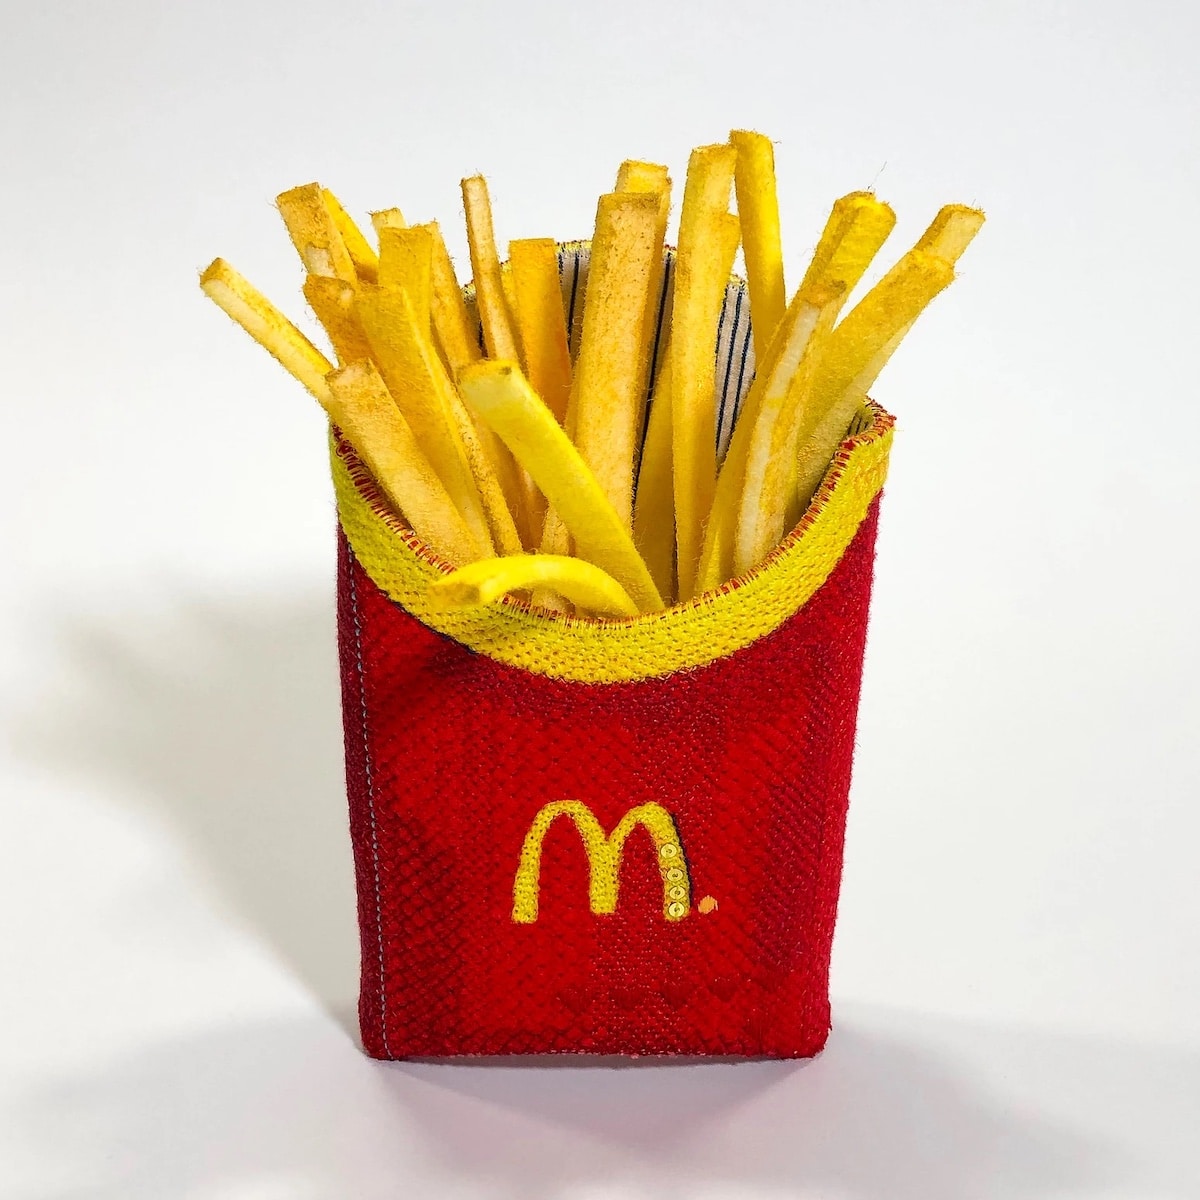 Escultura de papas fritas de McDonald's